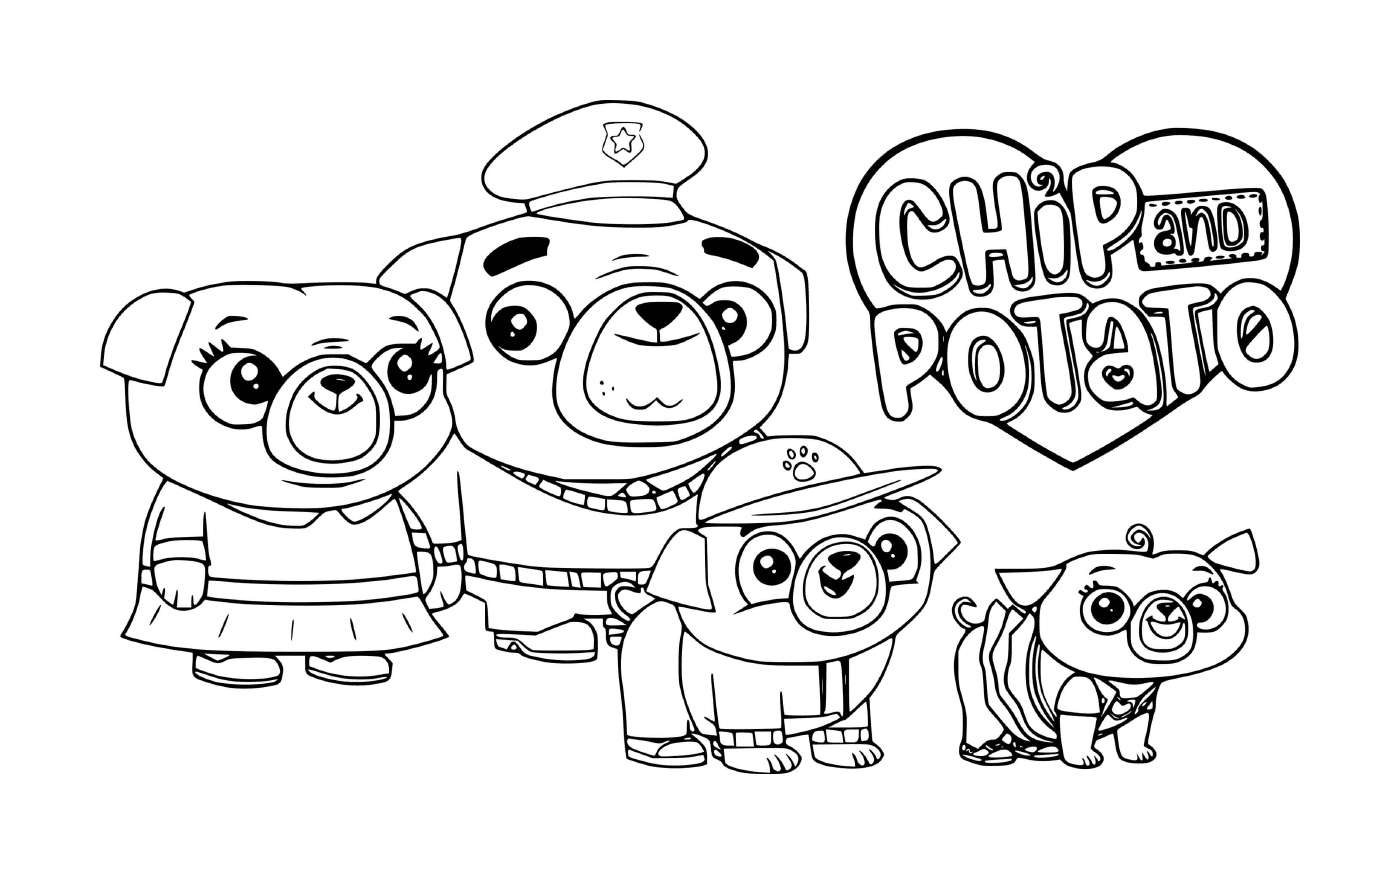  Chip Pug family 